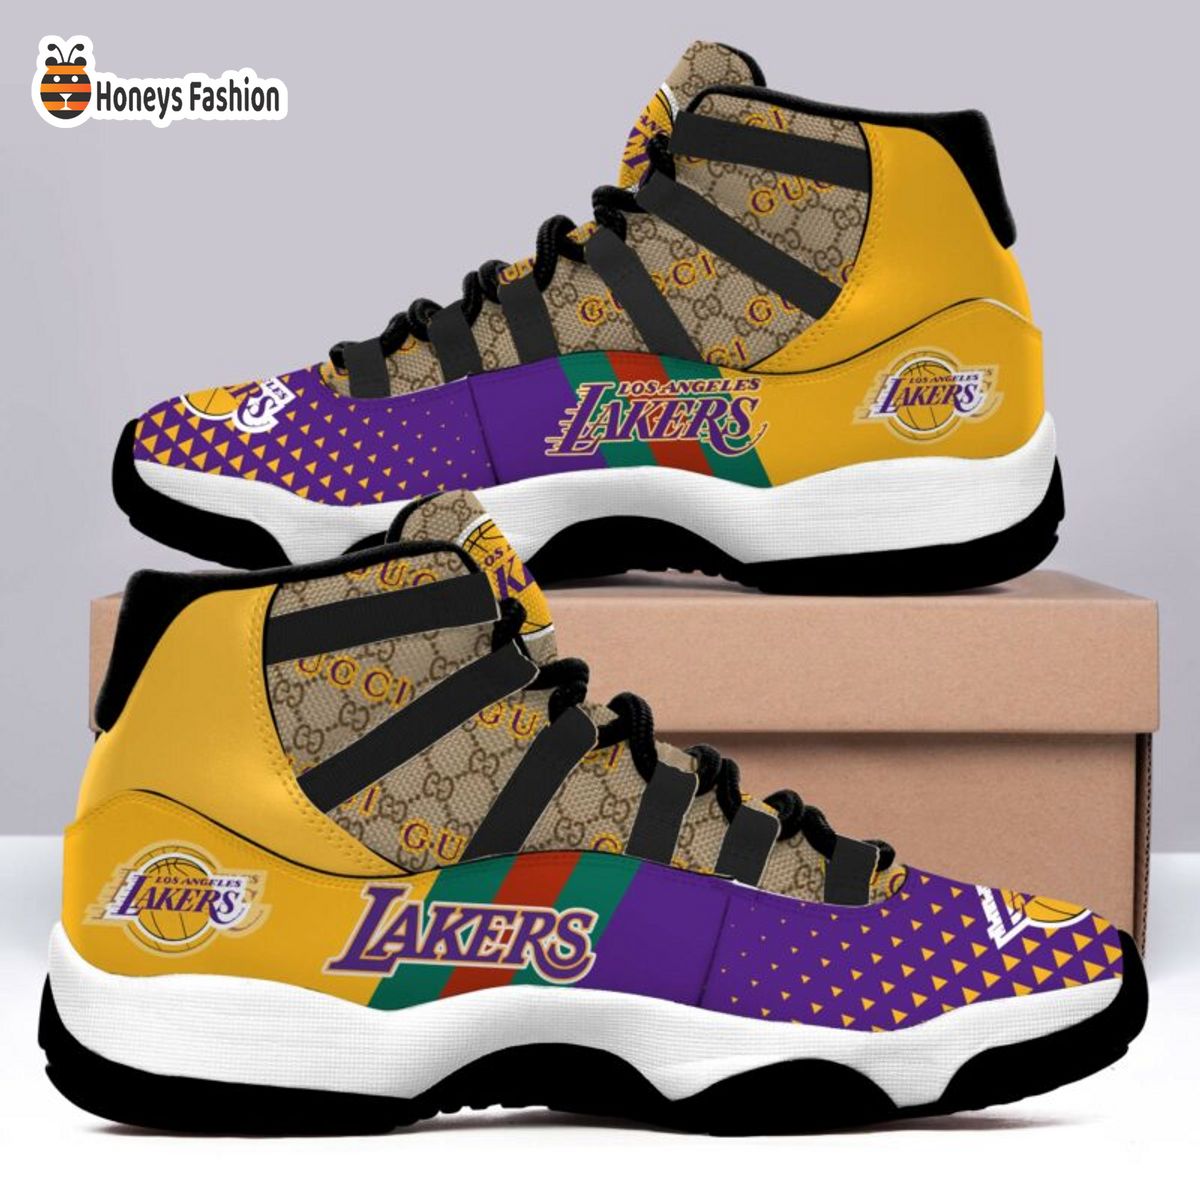 Los Angeles Lakers x Gucci Air Jordan 11 Sneaker